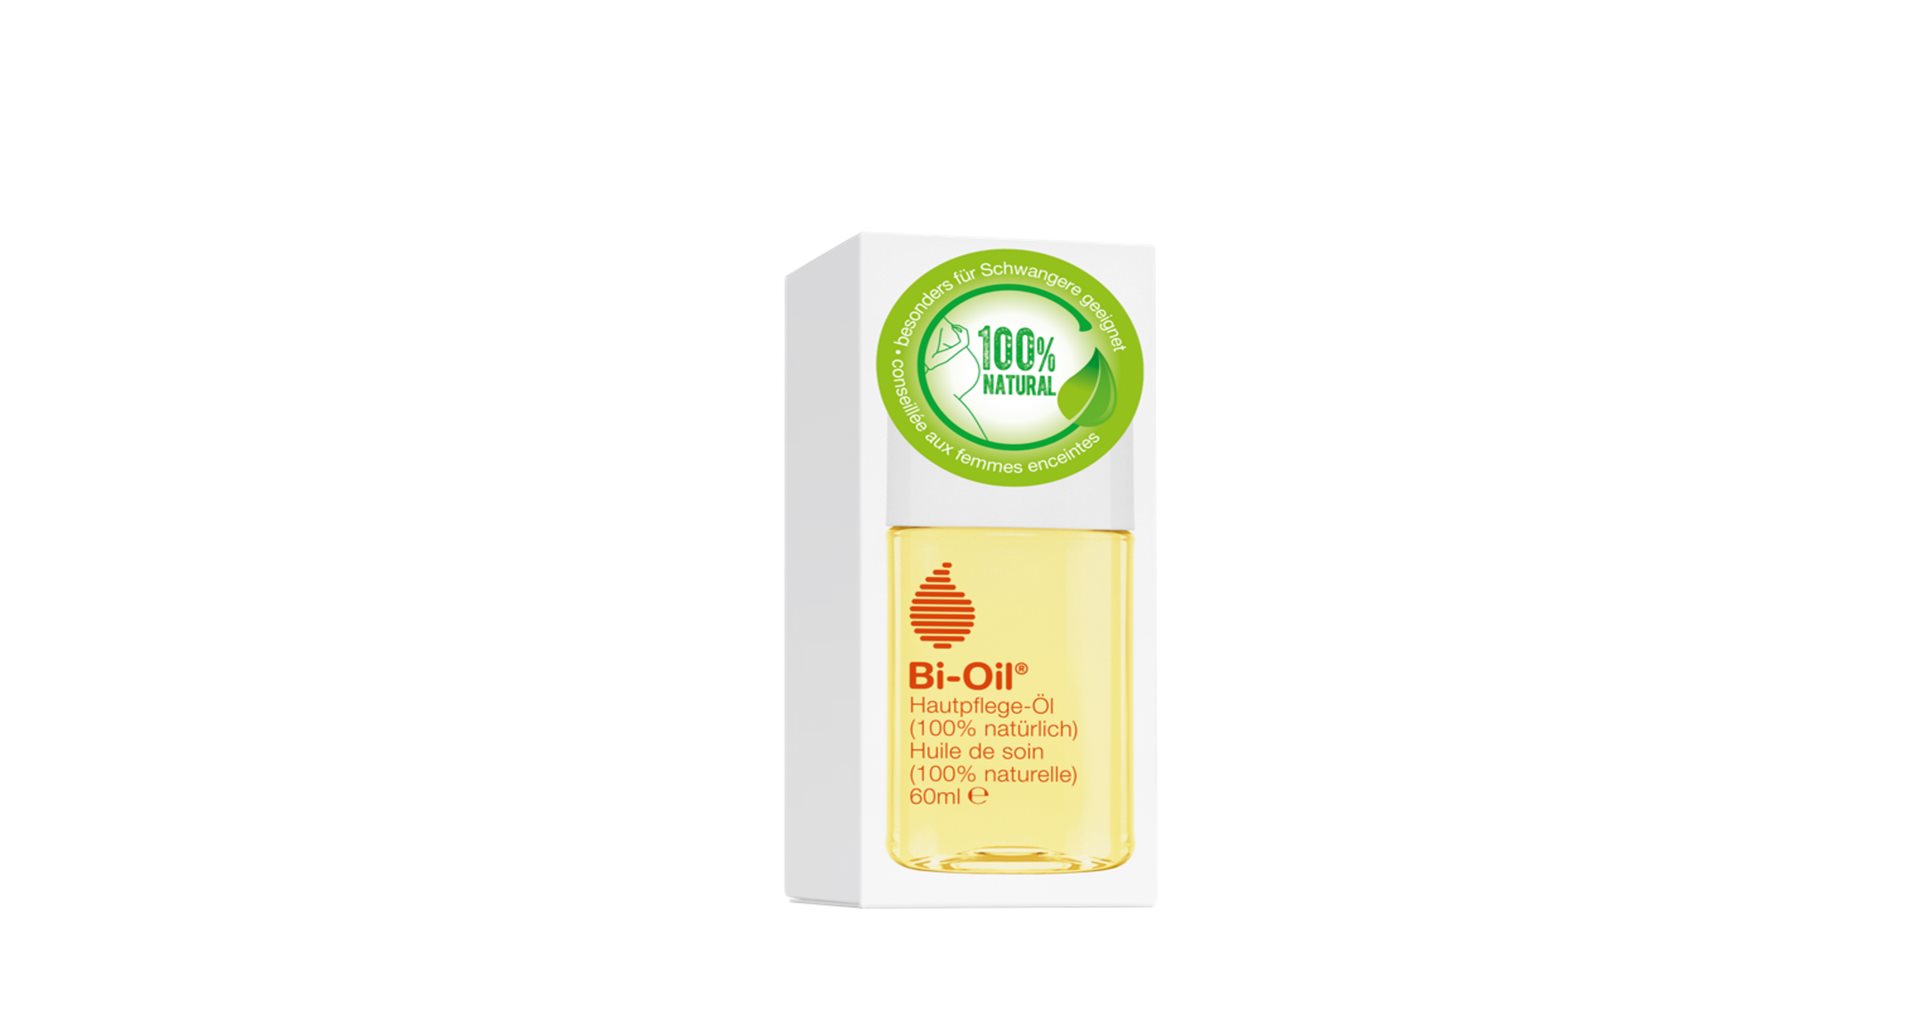 BI-OIL Natural Hautpflegeöl Fl 60 ml